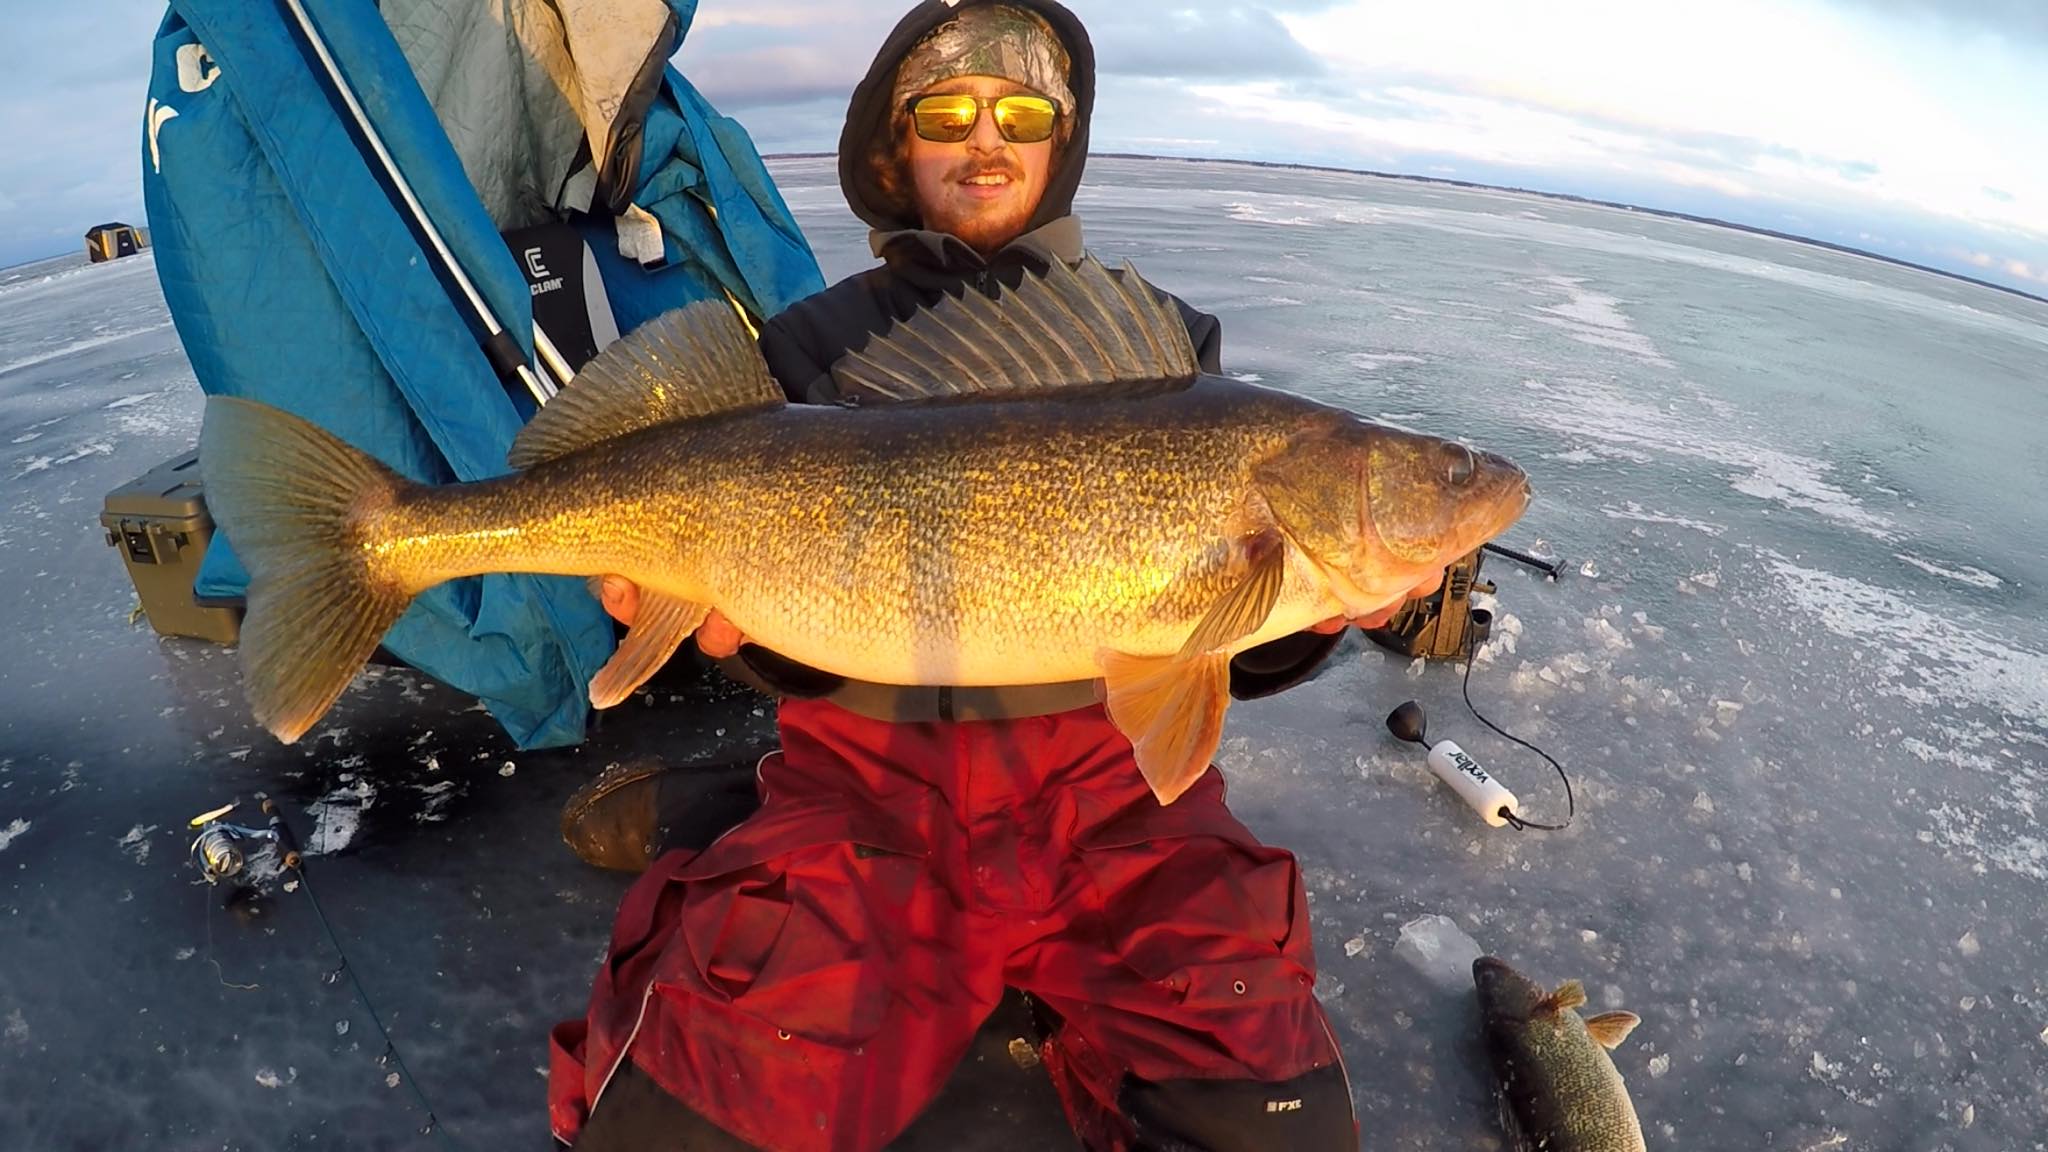 Cool new FFS baits, Jason Mitchell's night bite tricks, Lake trout